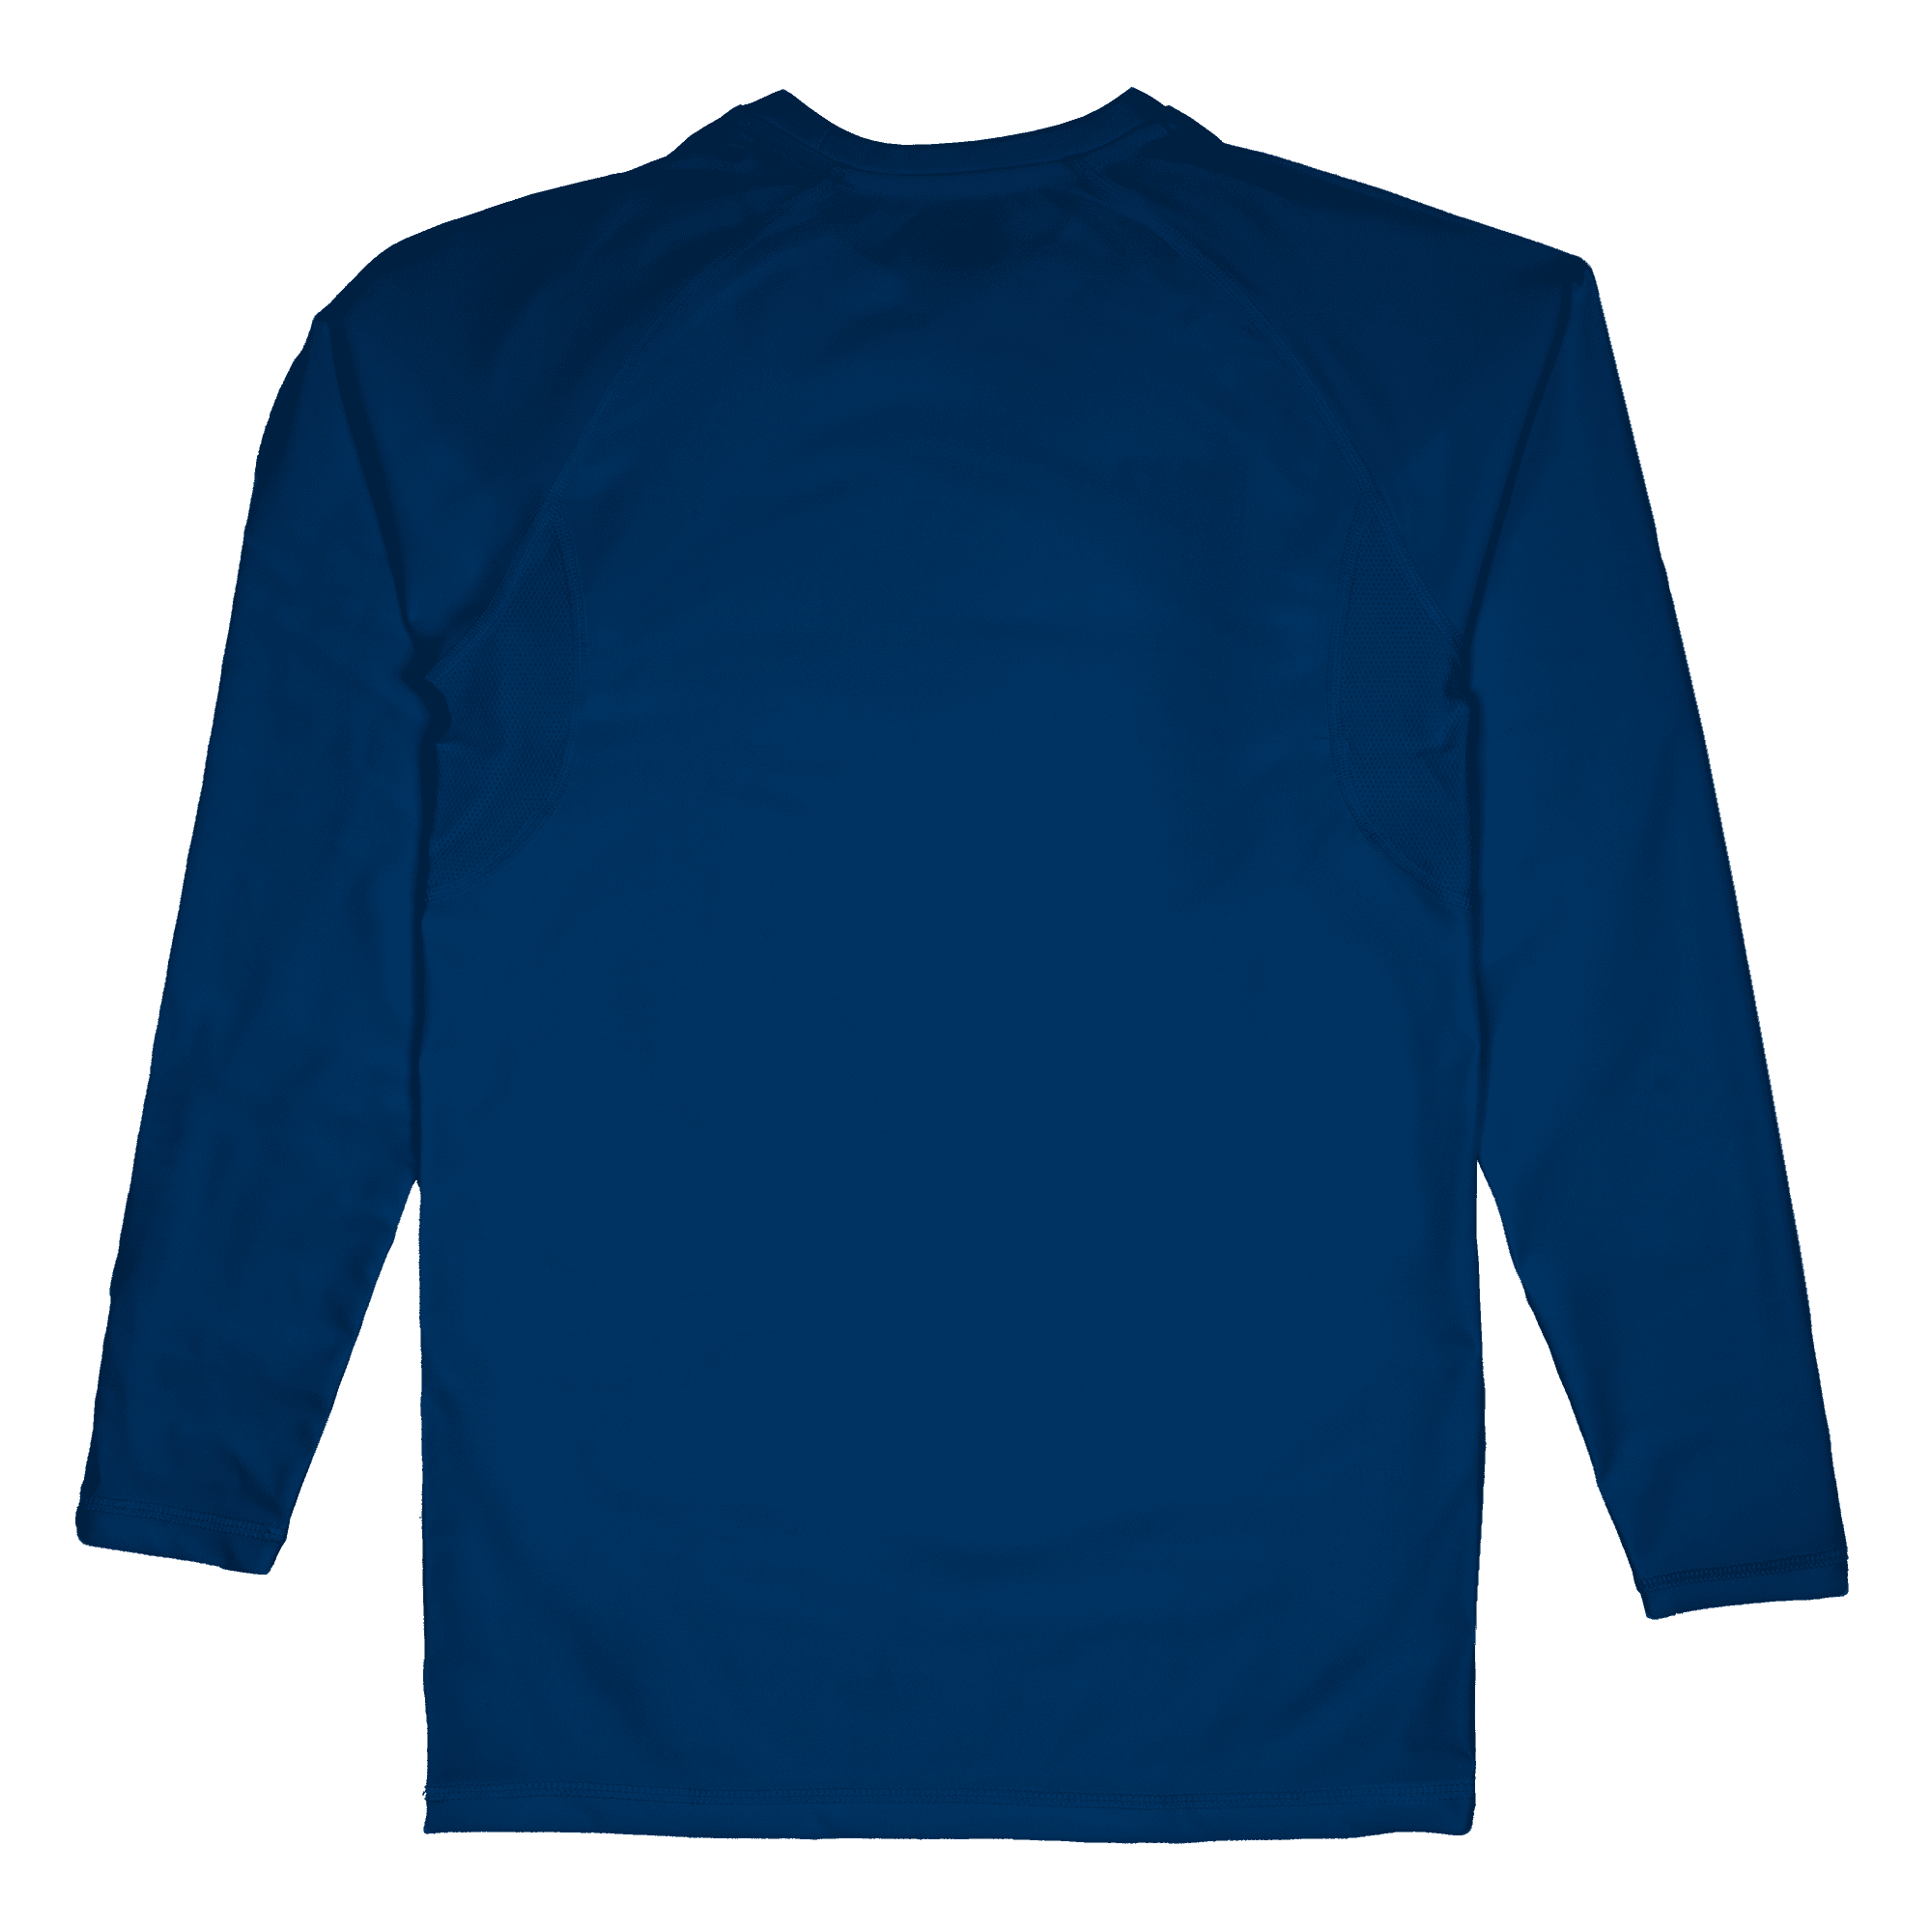 BU1 compression shirt blue